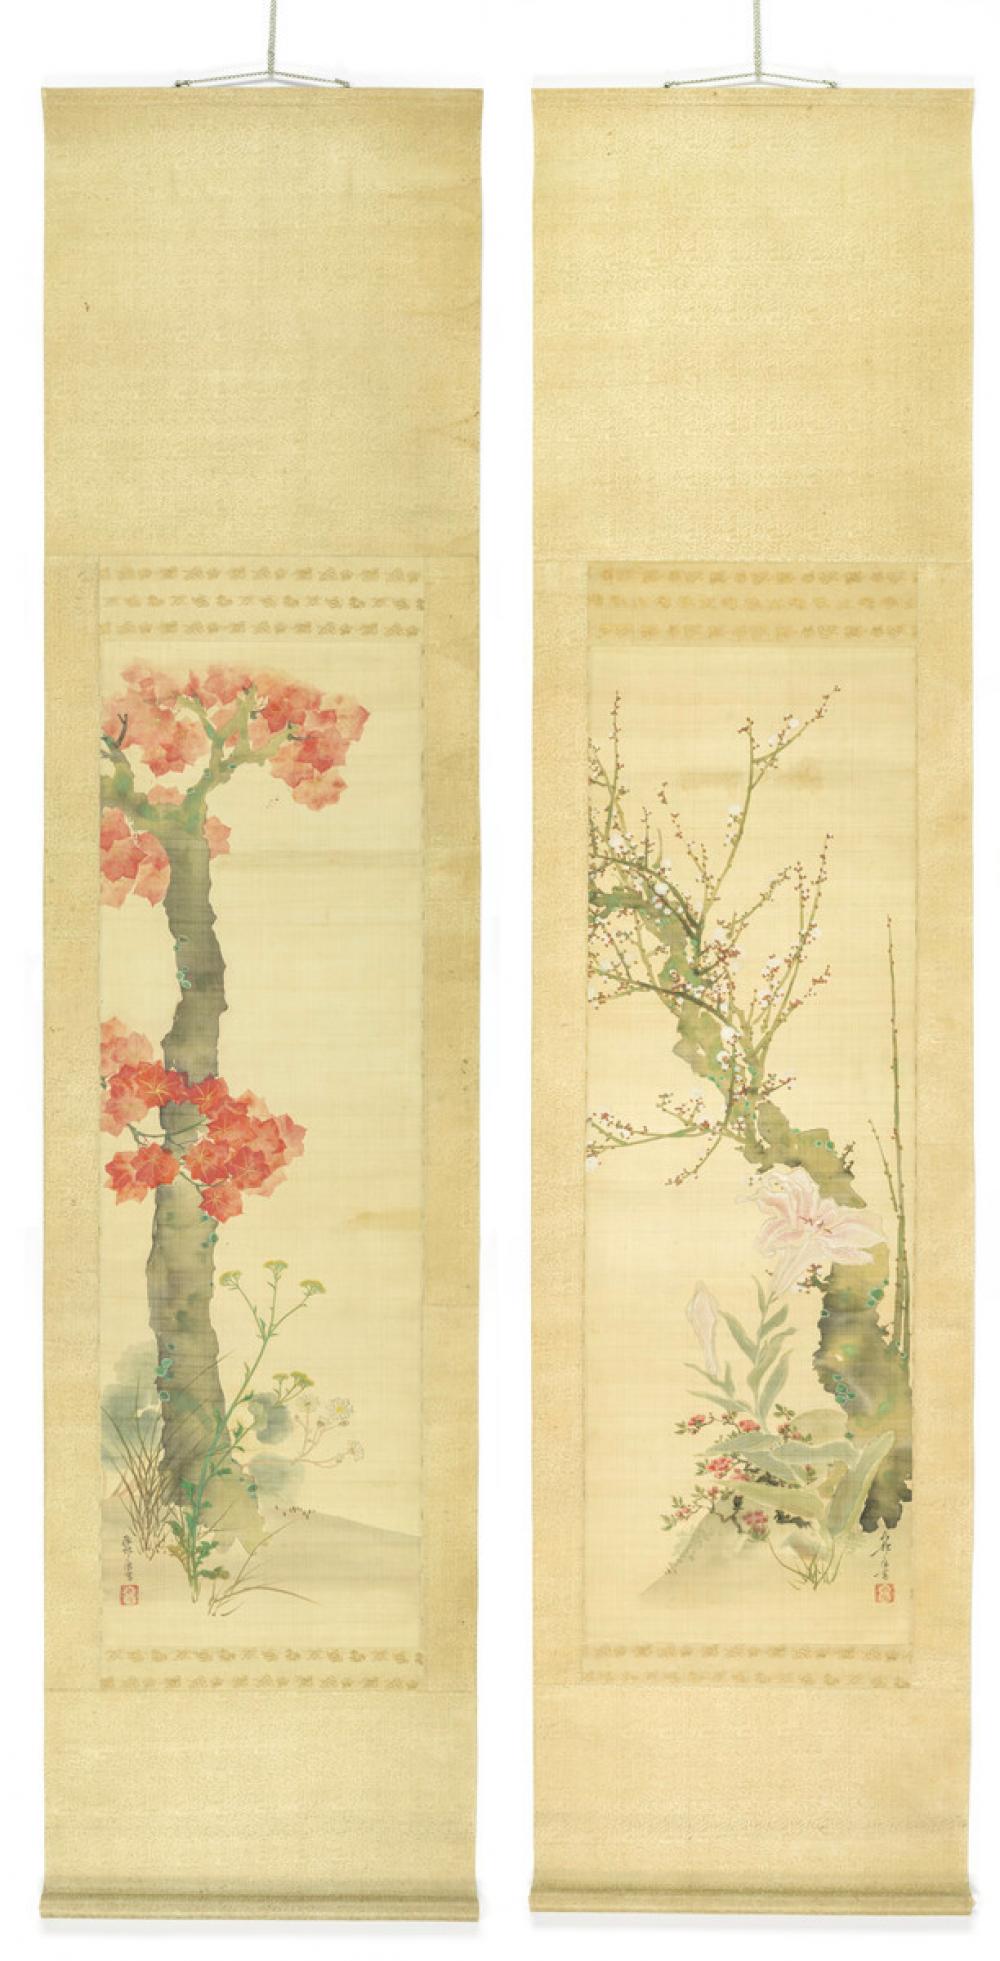 Ikeda Koson (Japanese, 1801-1866), [Autumn and Spring], 19th century